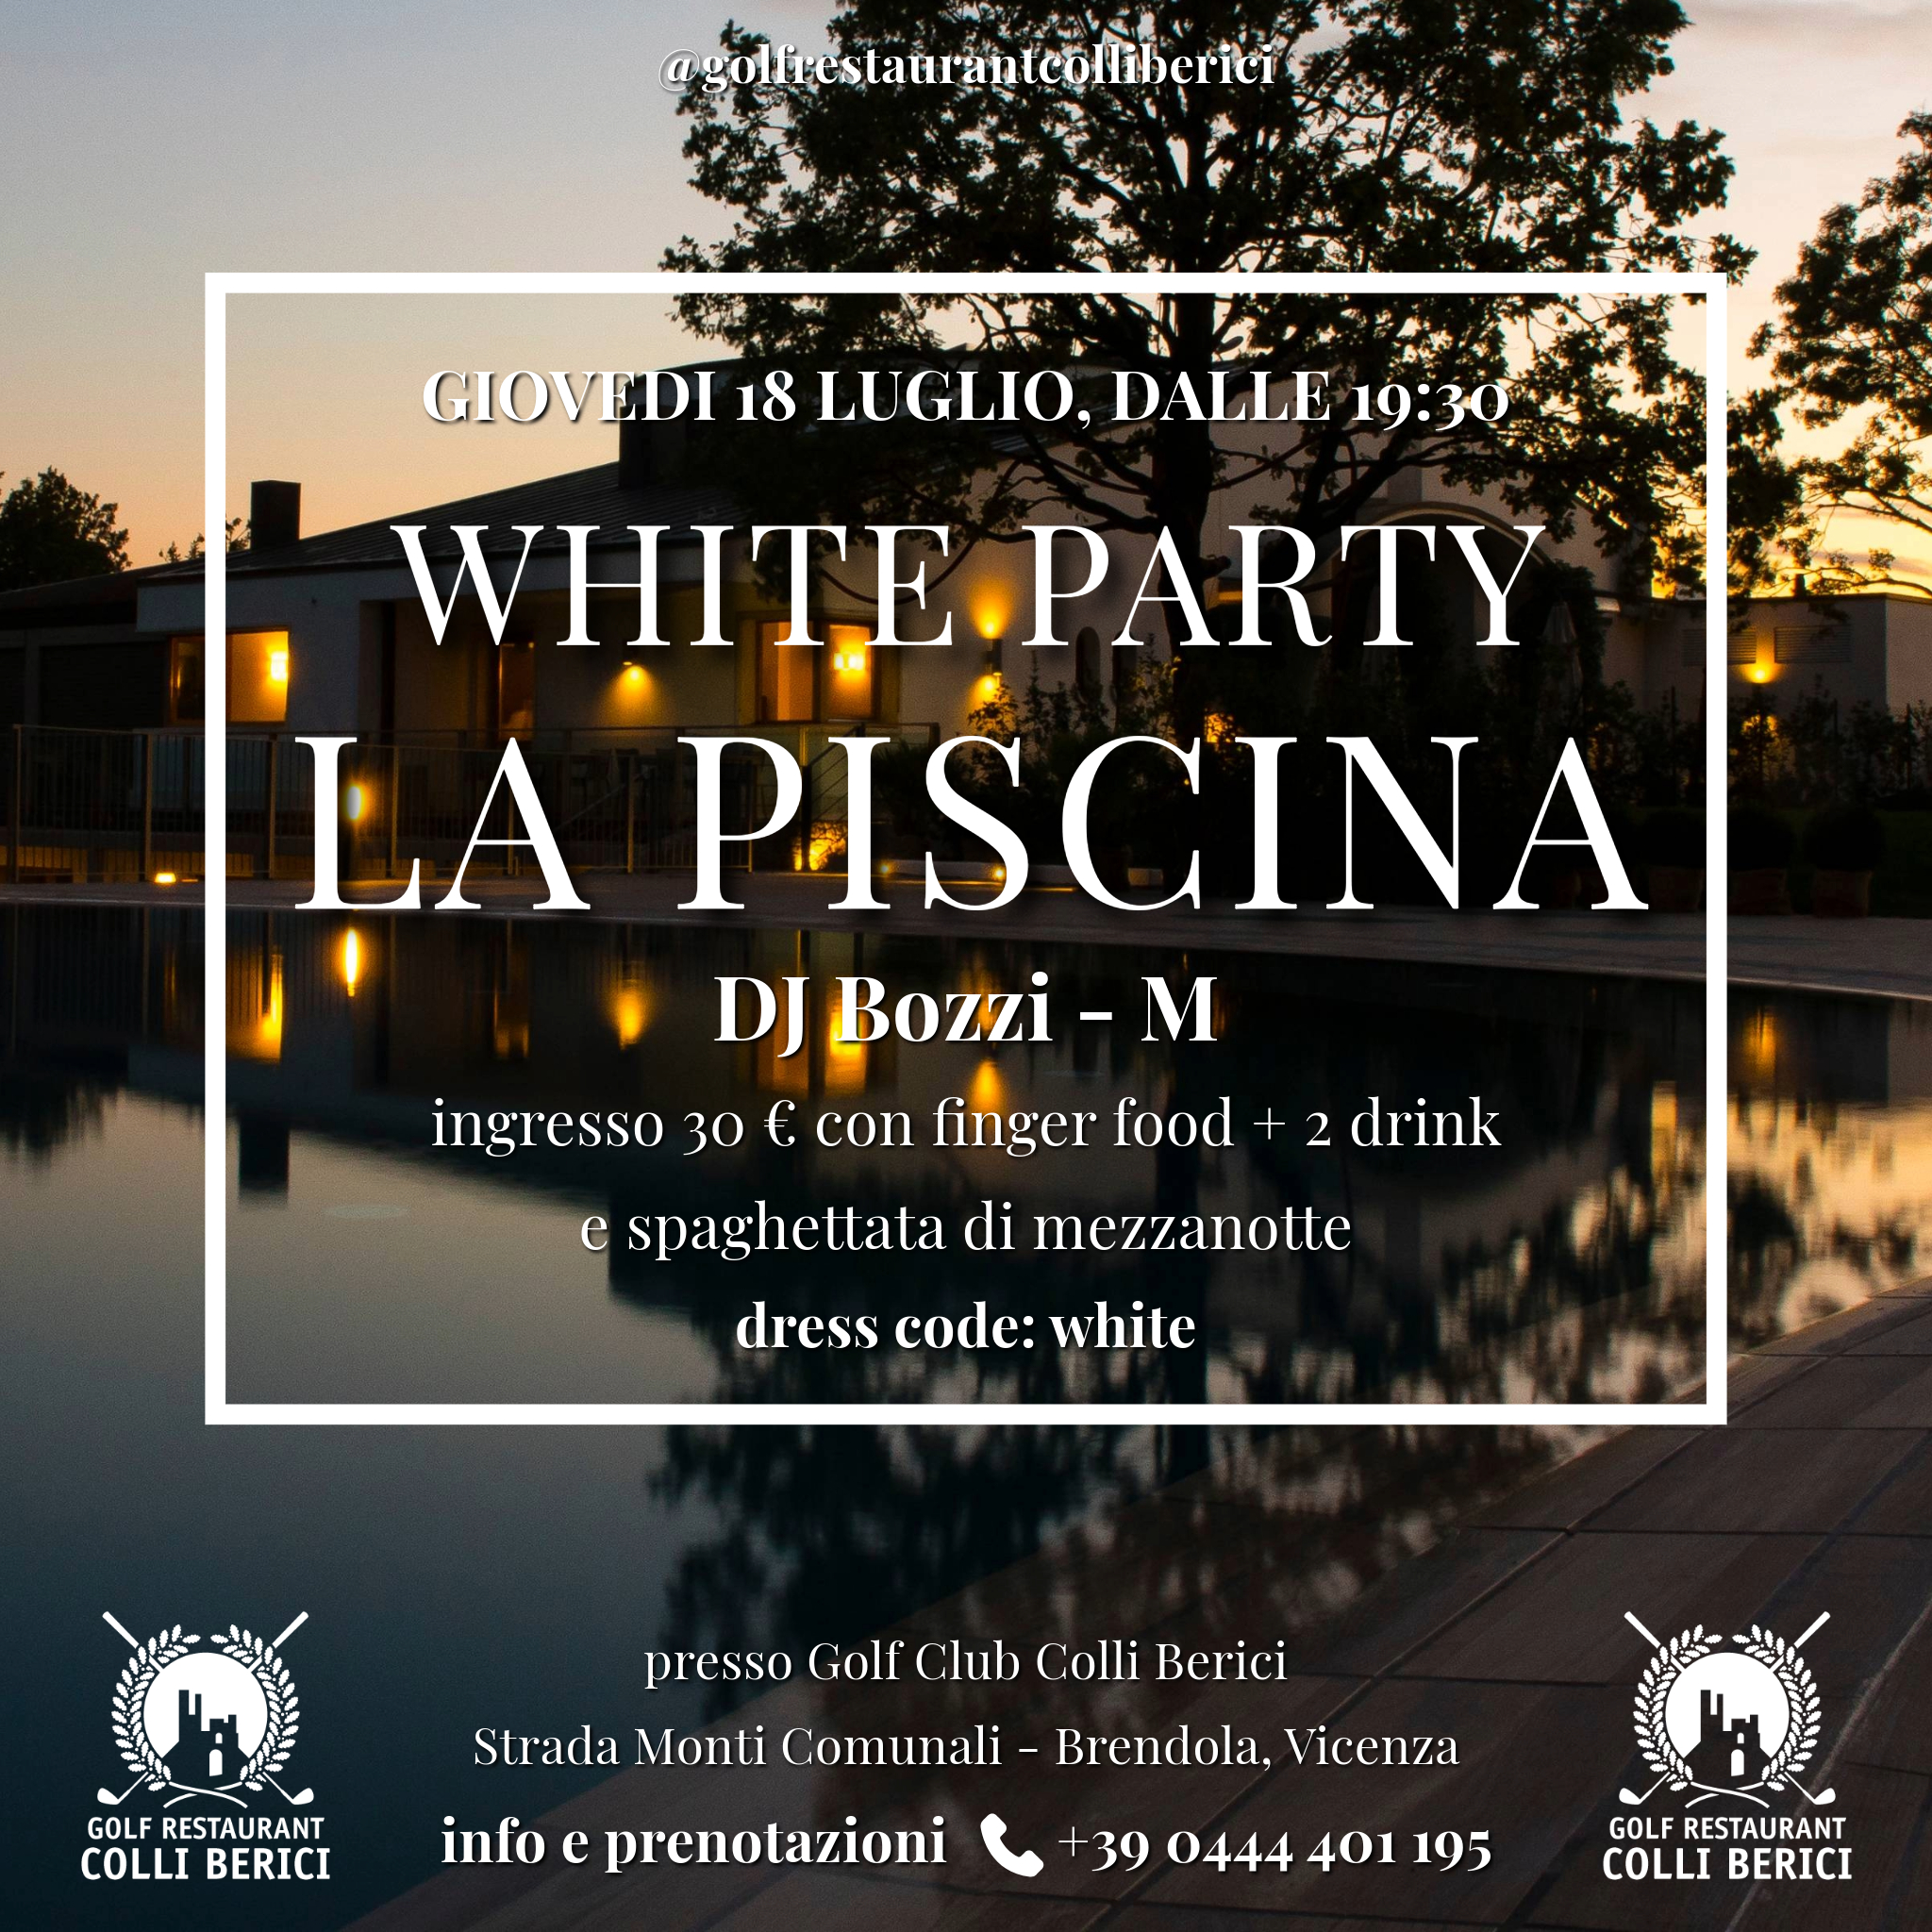 White Party La Piscina!